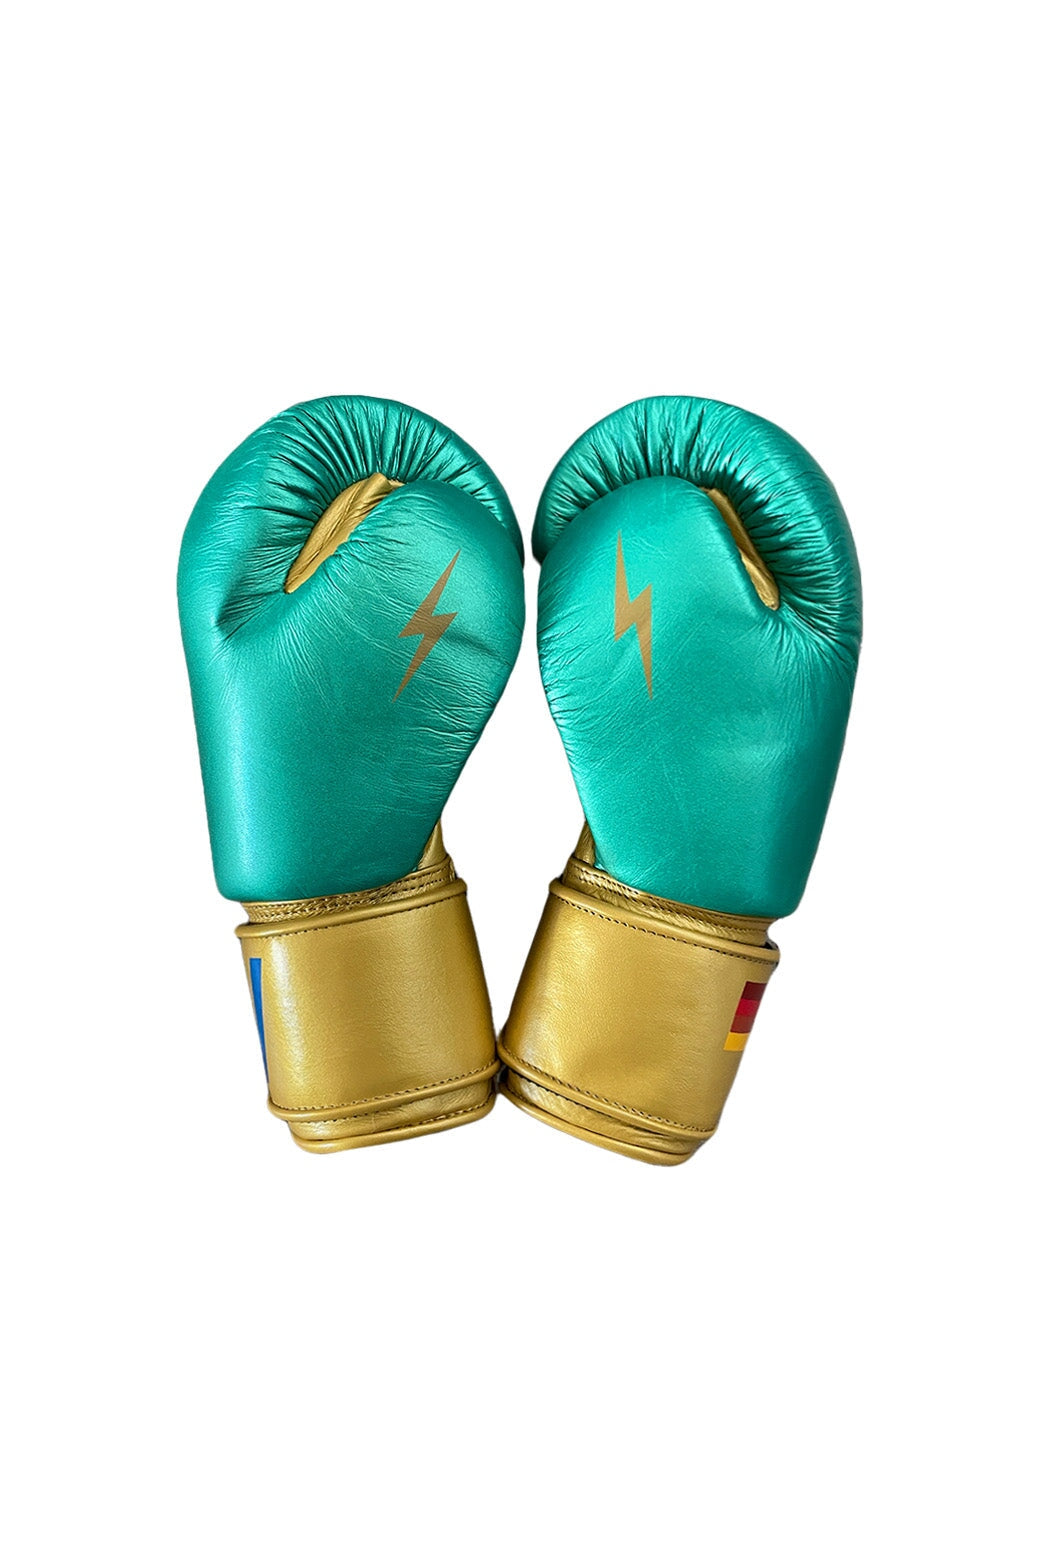 BOXING GLOVES - GREEN // GOLD Boxing Gloves Aviator Nation 